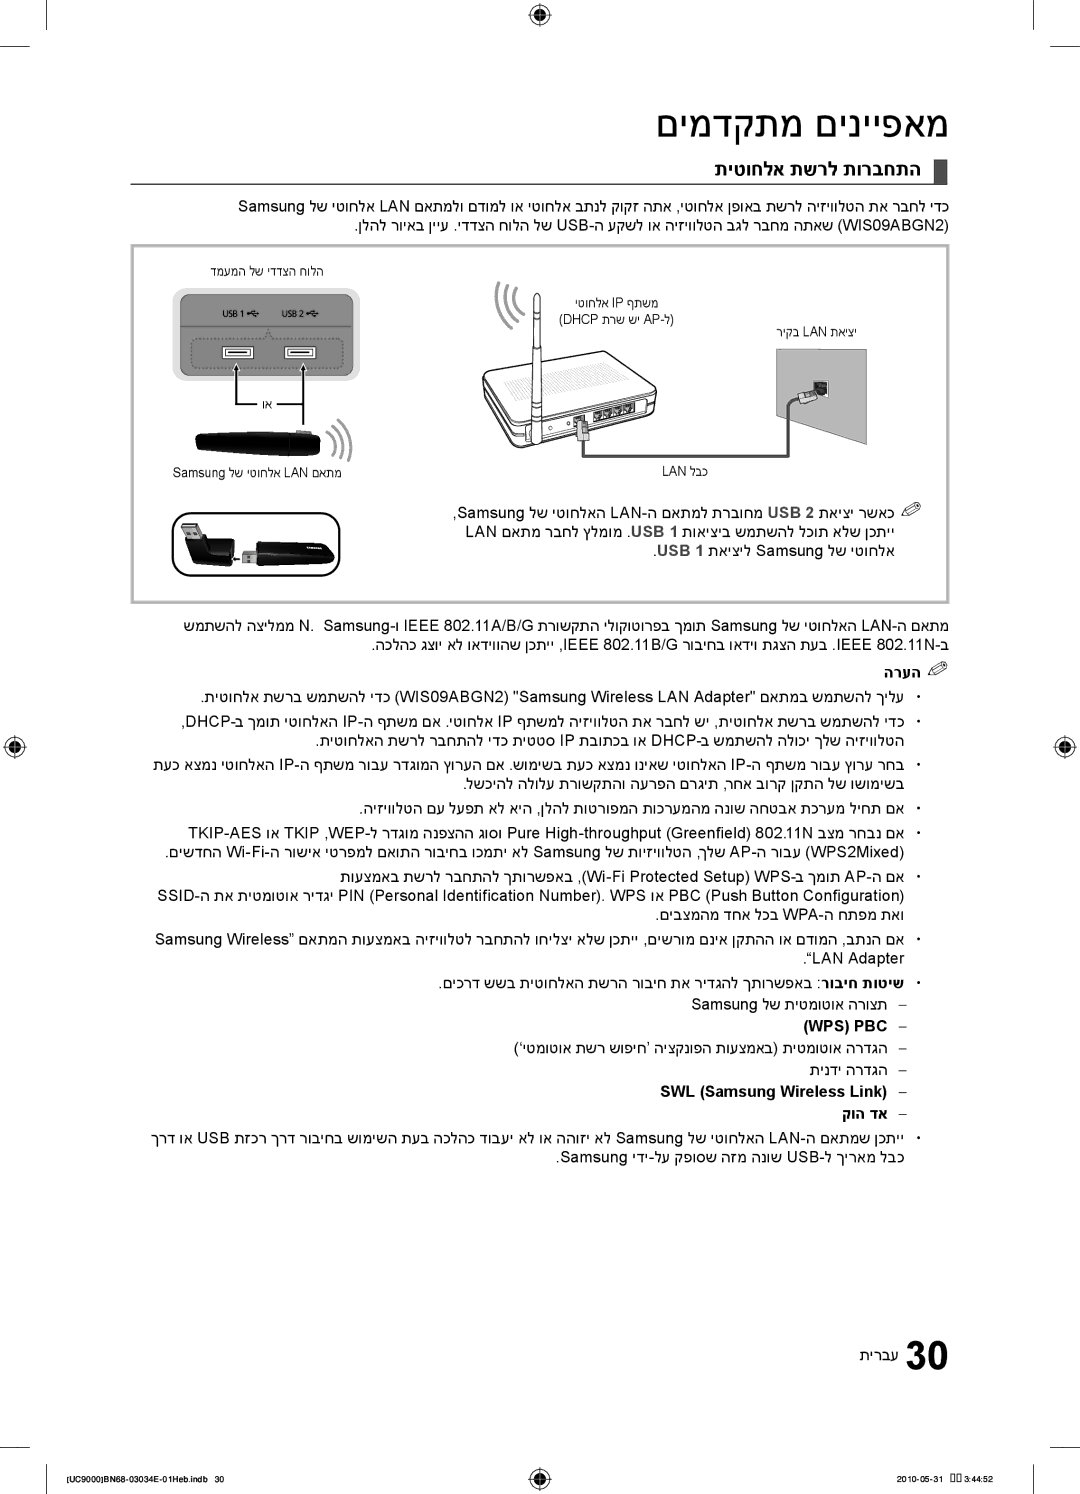 Samsung UA55C9000SRXSQ manual תיטוחלא תשרל תורבחתה, Wps ‏Pbc, SWL‏Samsung Wireless Link, קוה דא 